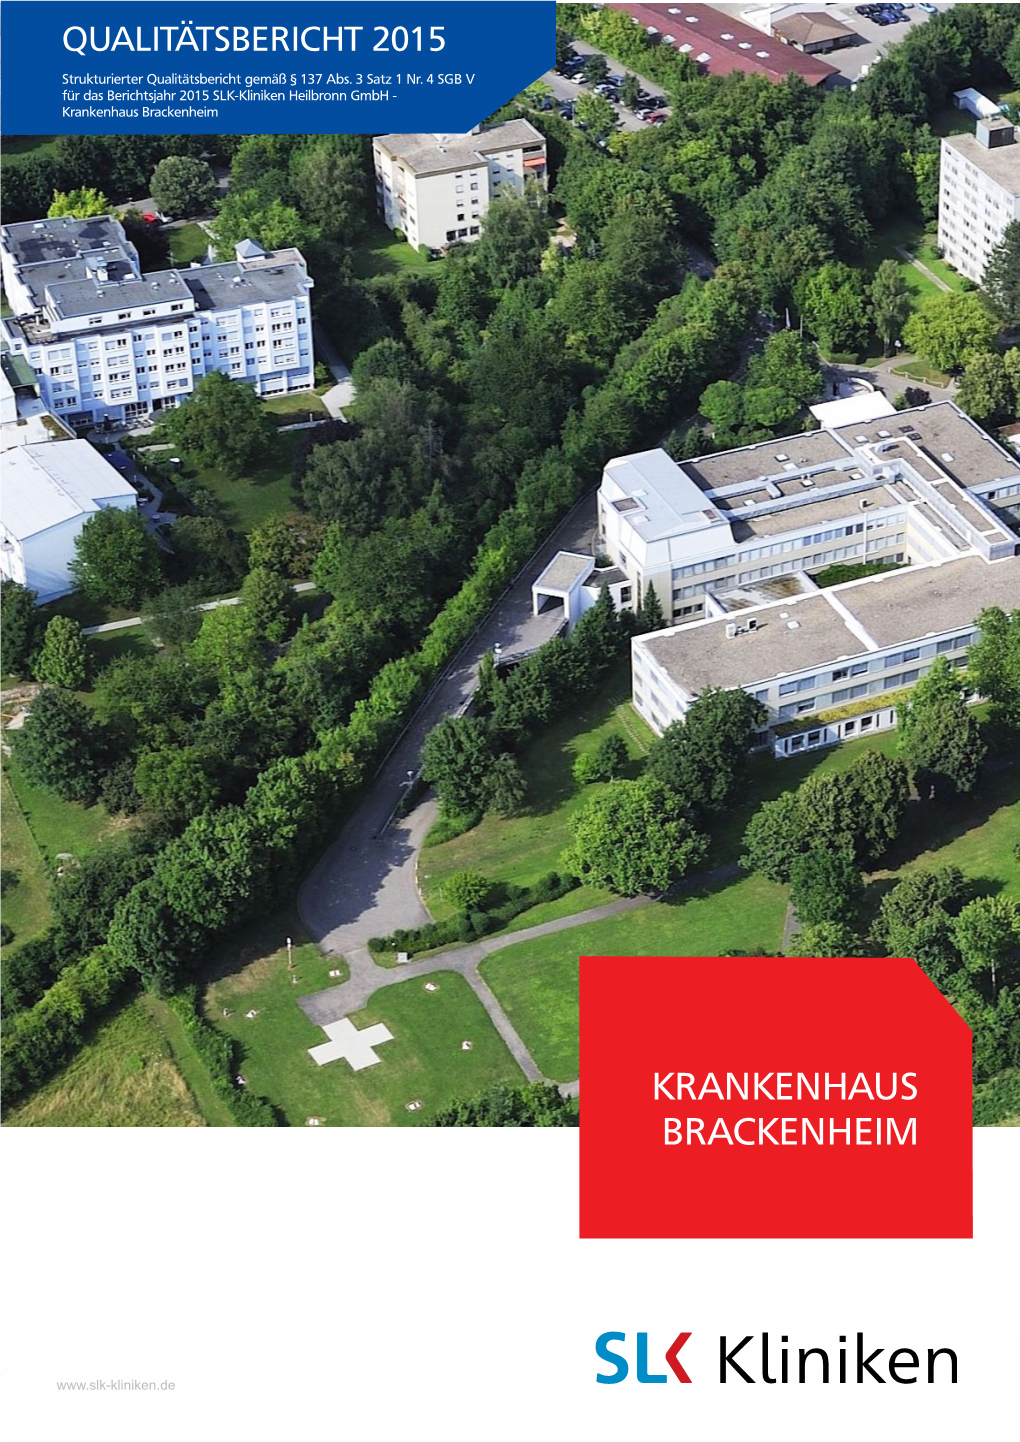 Krankenhaus Brackenheim